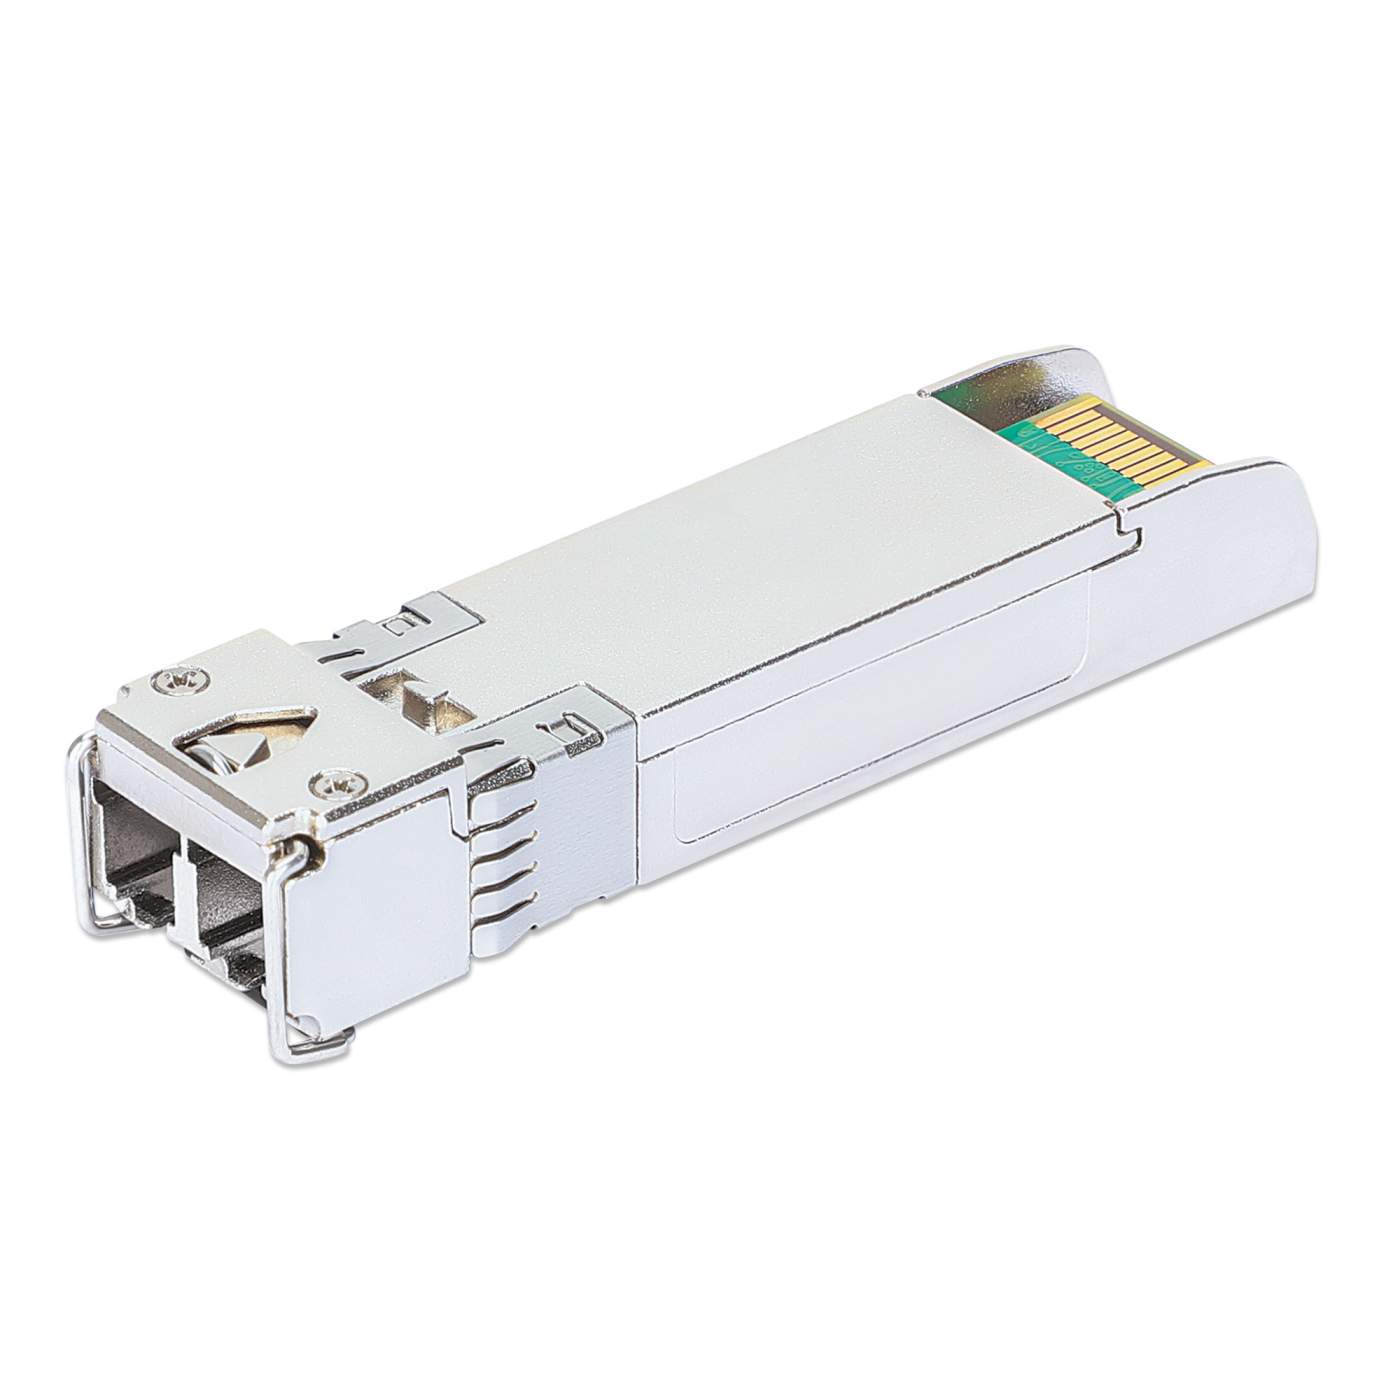 10 GbE Fiber SFP+ Optical Transceiver Module (507462)